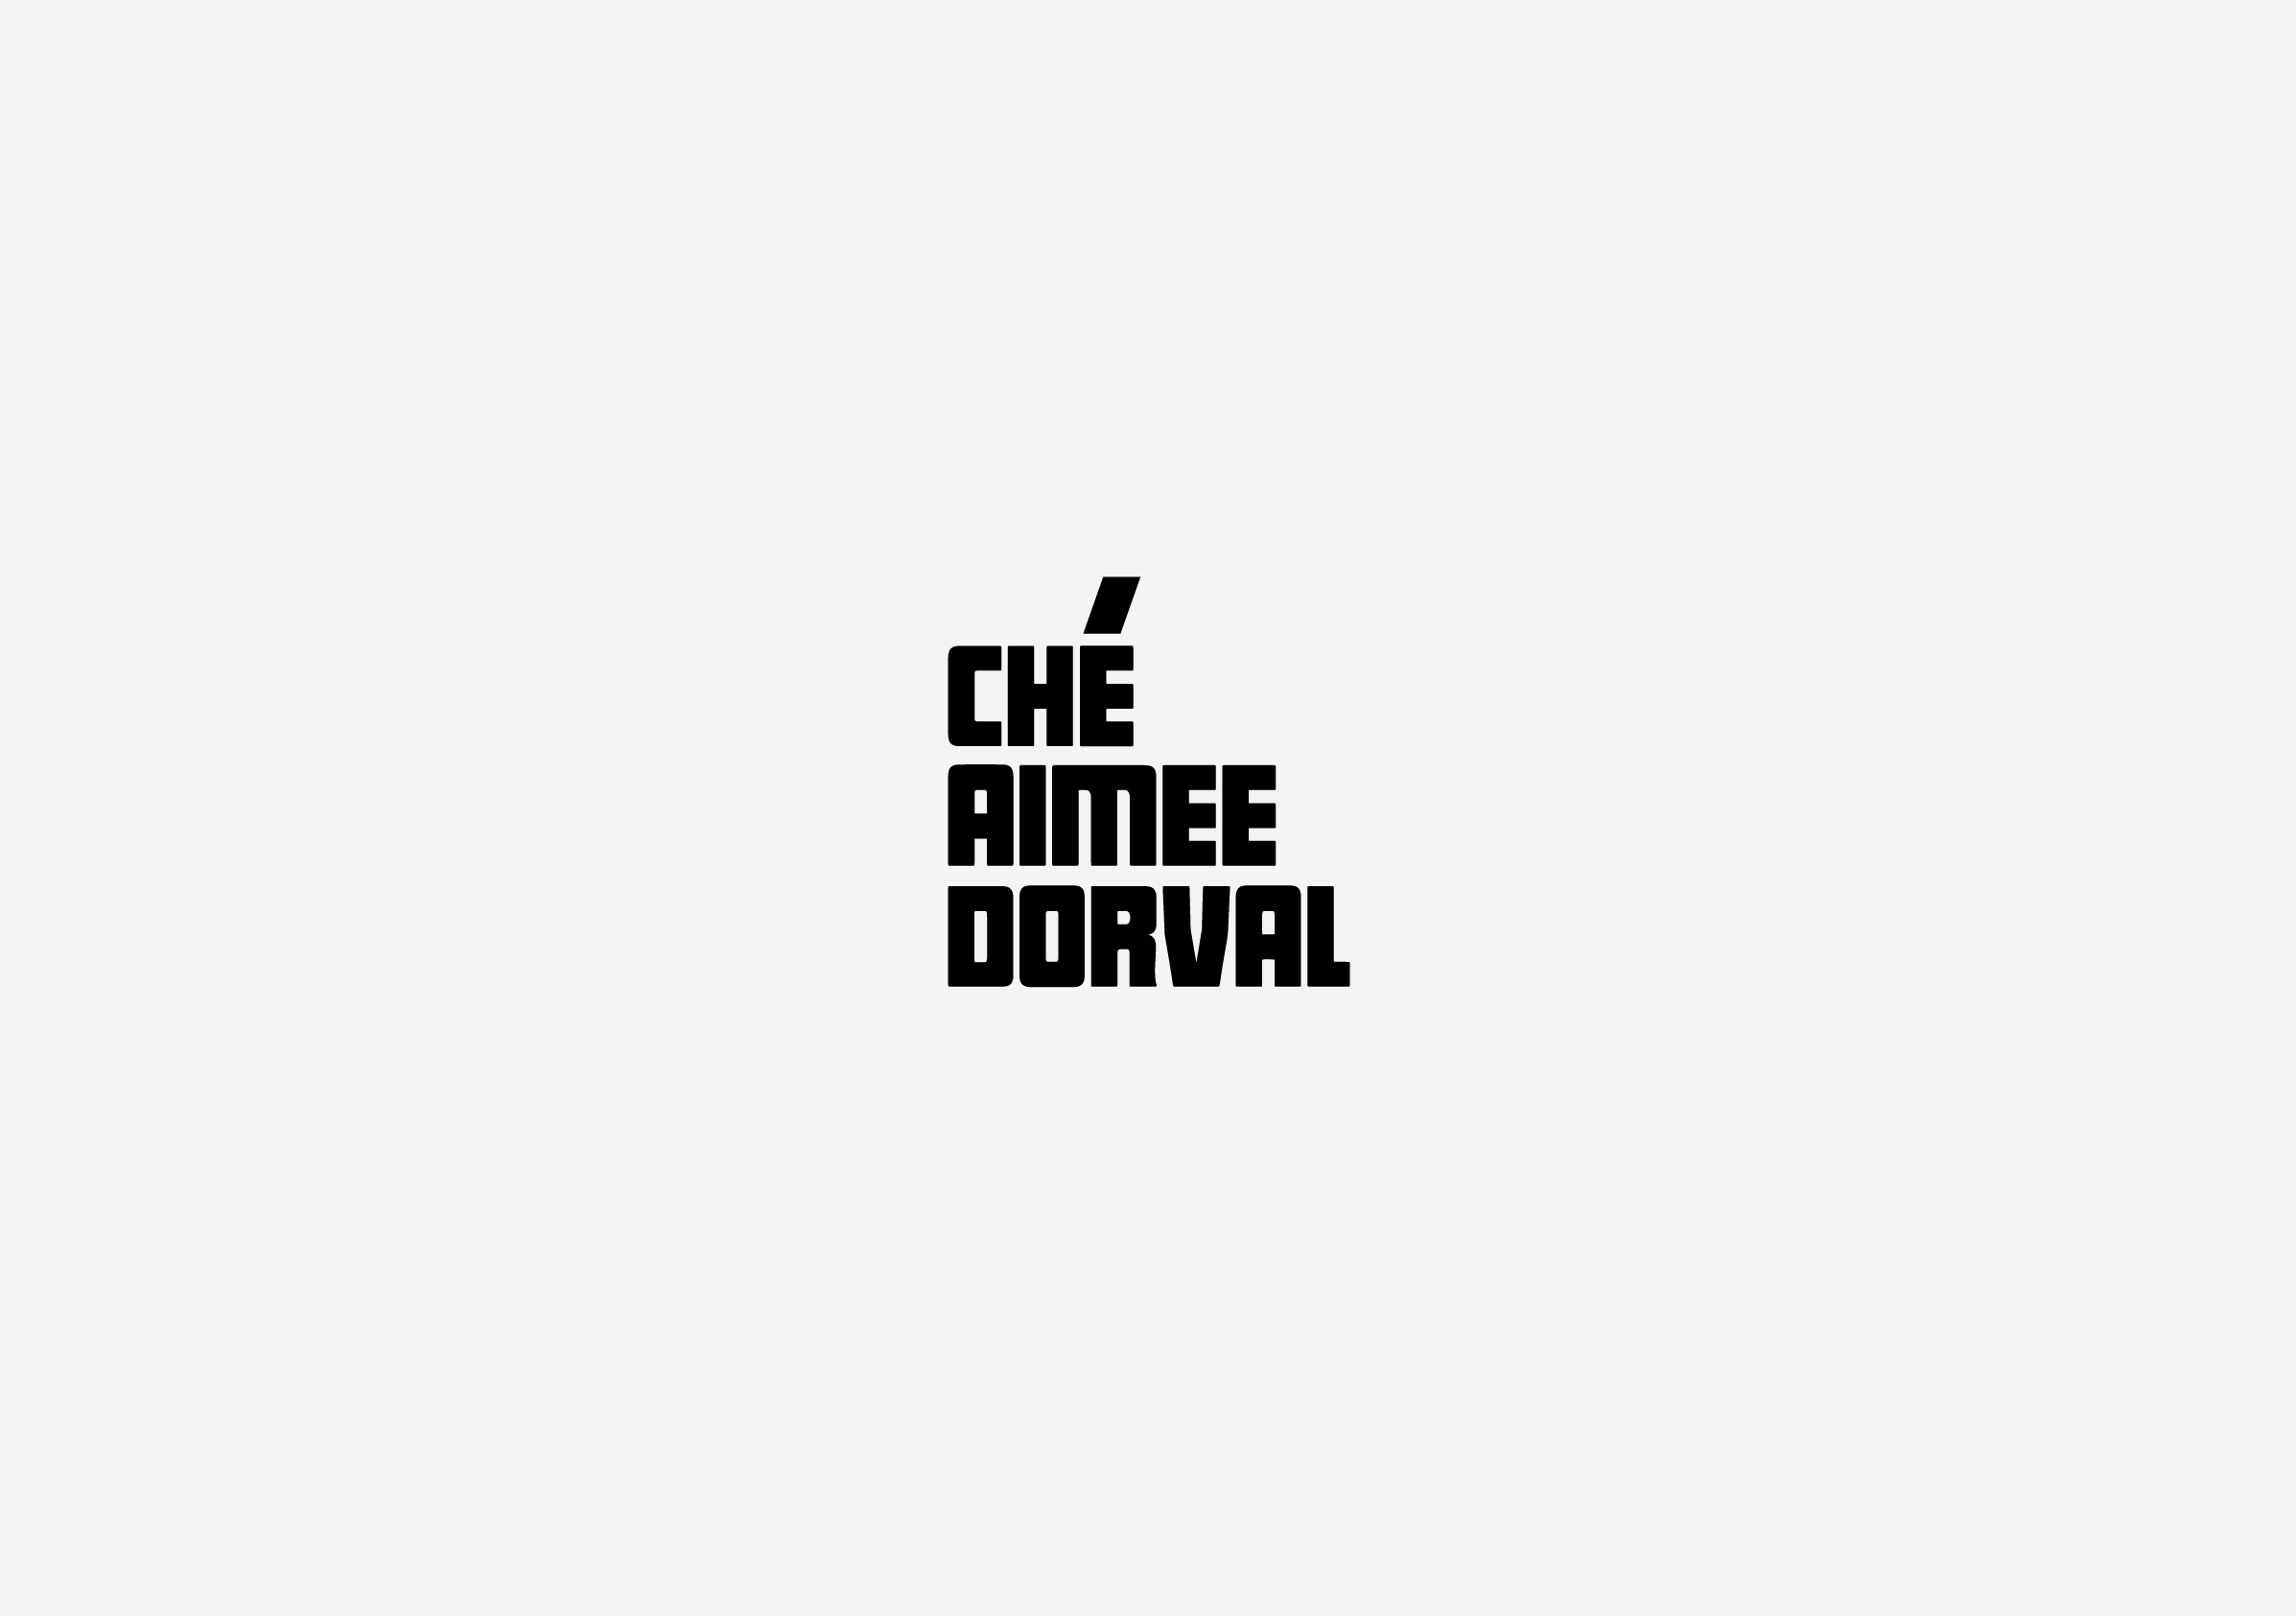 Ché Aimee Dorval: Graphic design including album artwork for Canadian recording artist